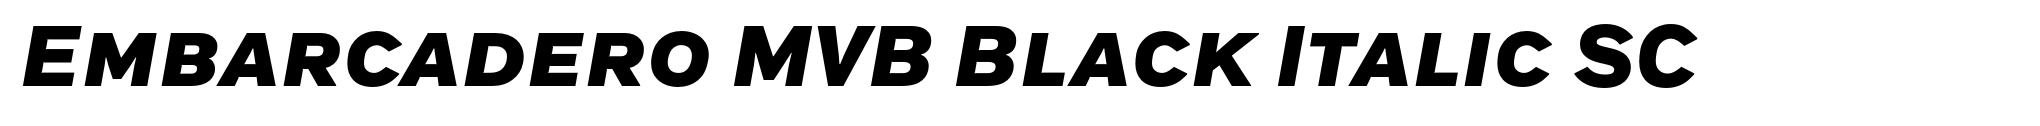 Embarcadero MVB Black Italic SC image